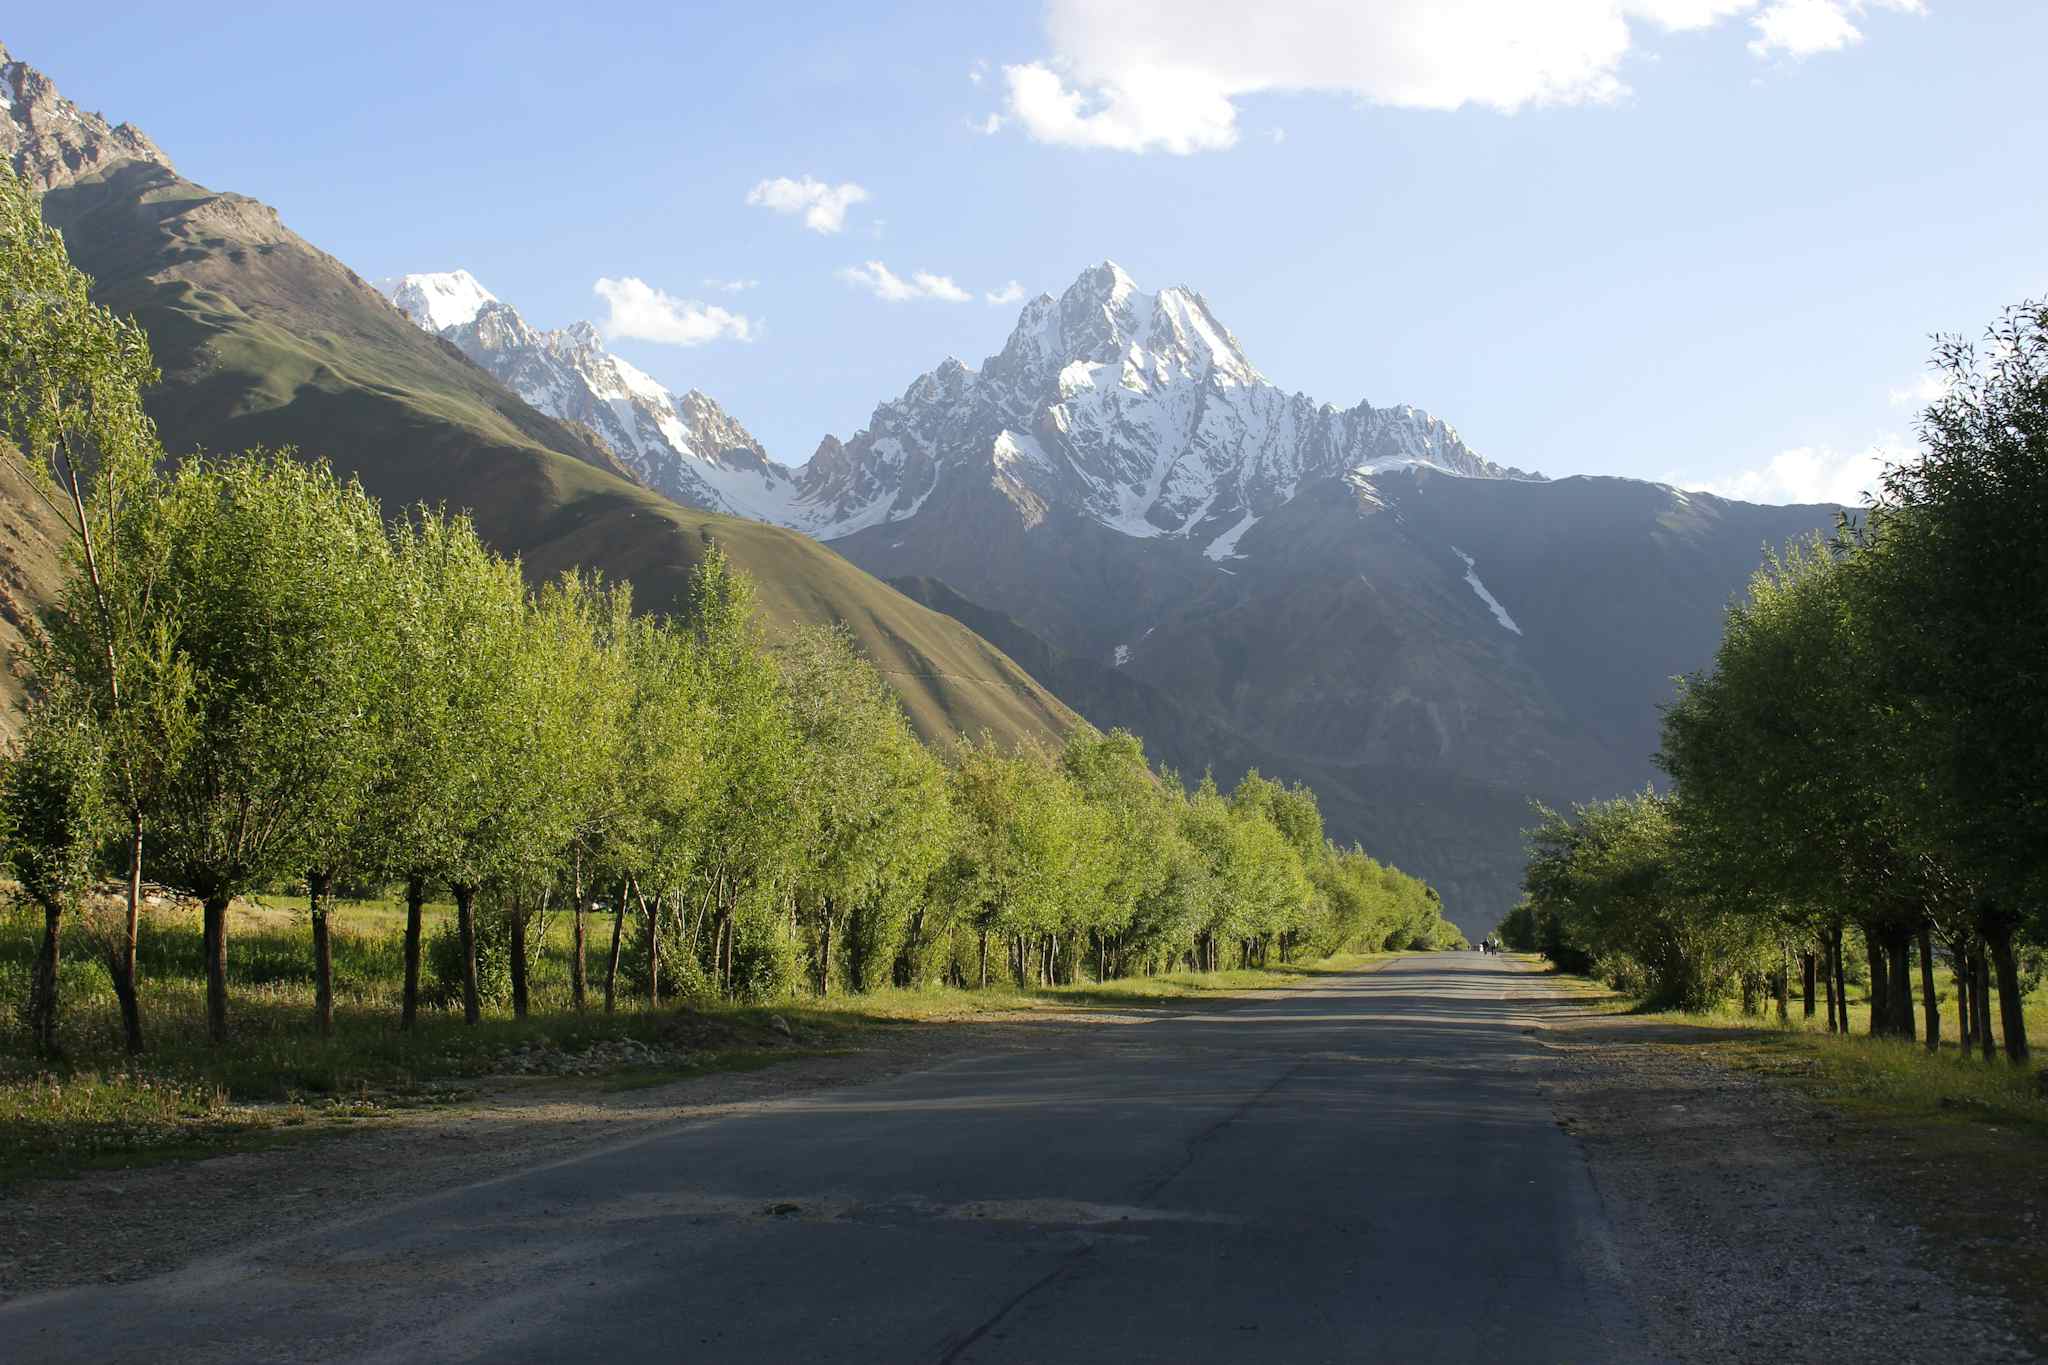 Pamir Mountains, Tajikistan
Host image: Orom Travel